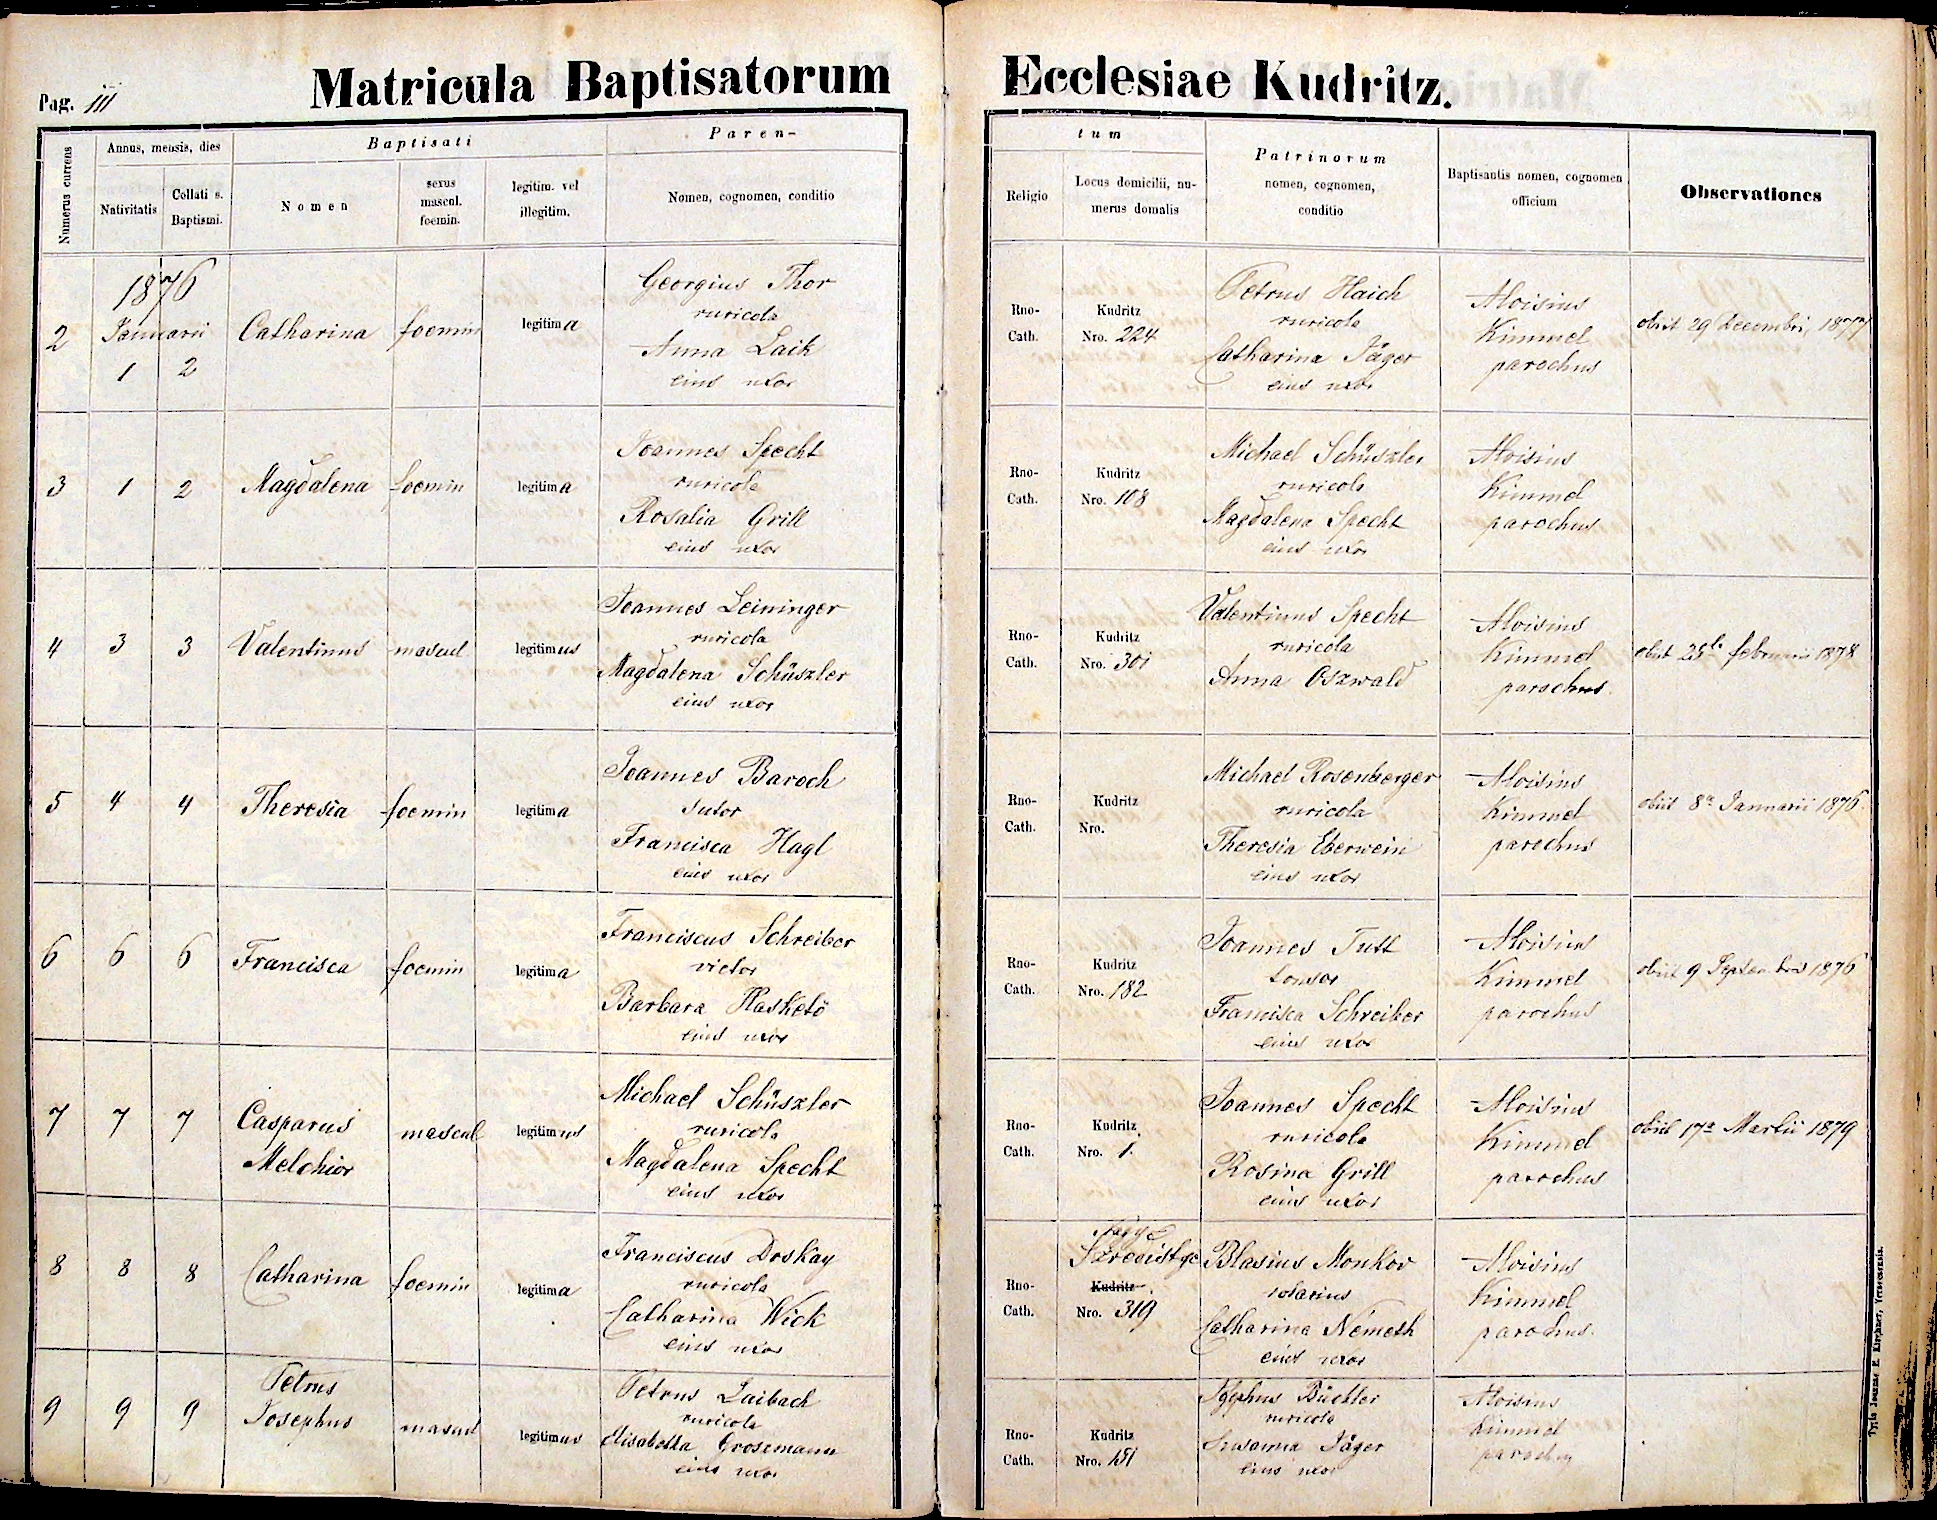 images/church_records/BIRTHS/1870-1879B/1876/111